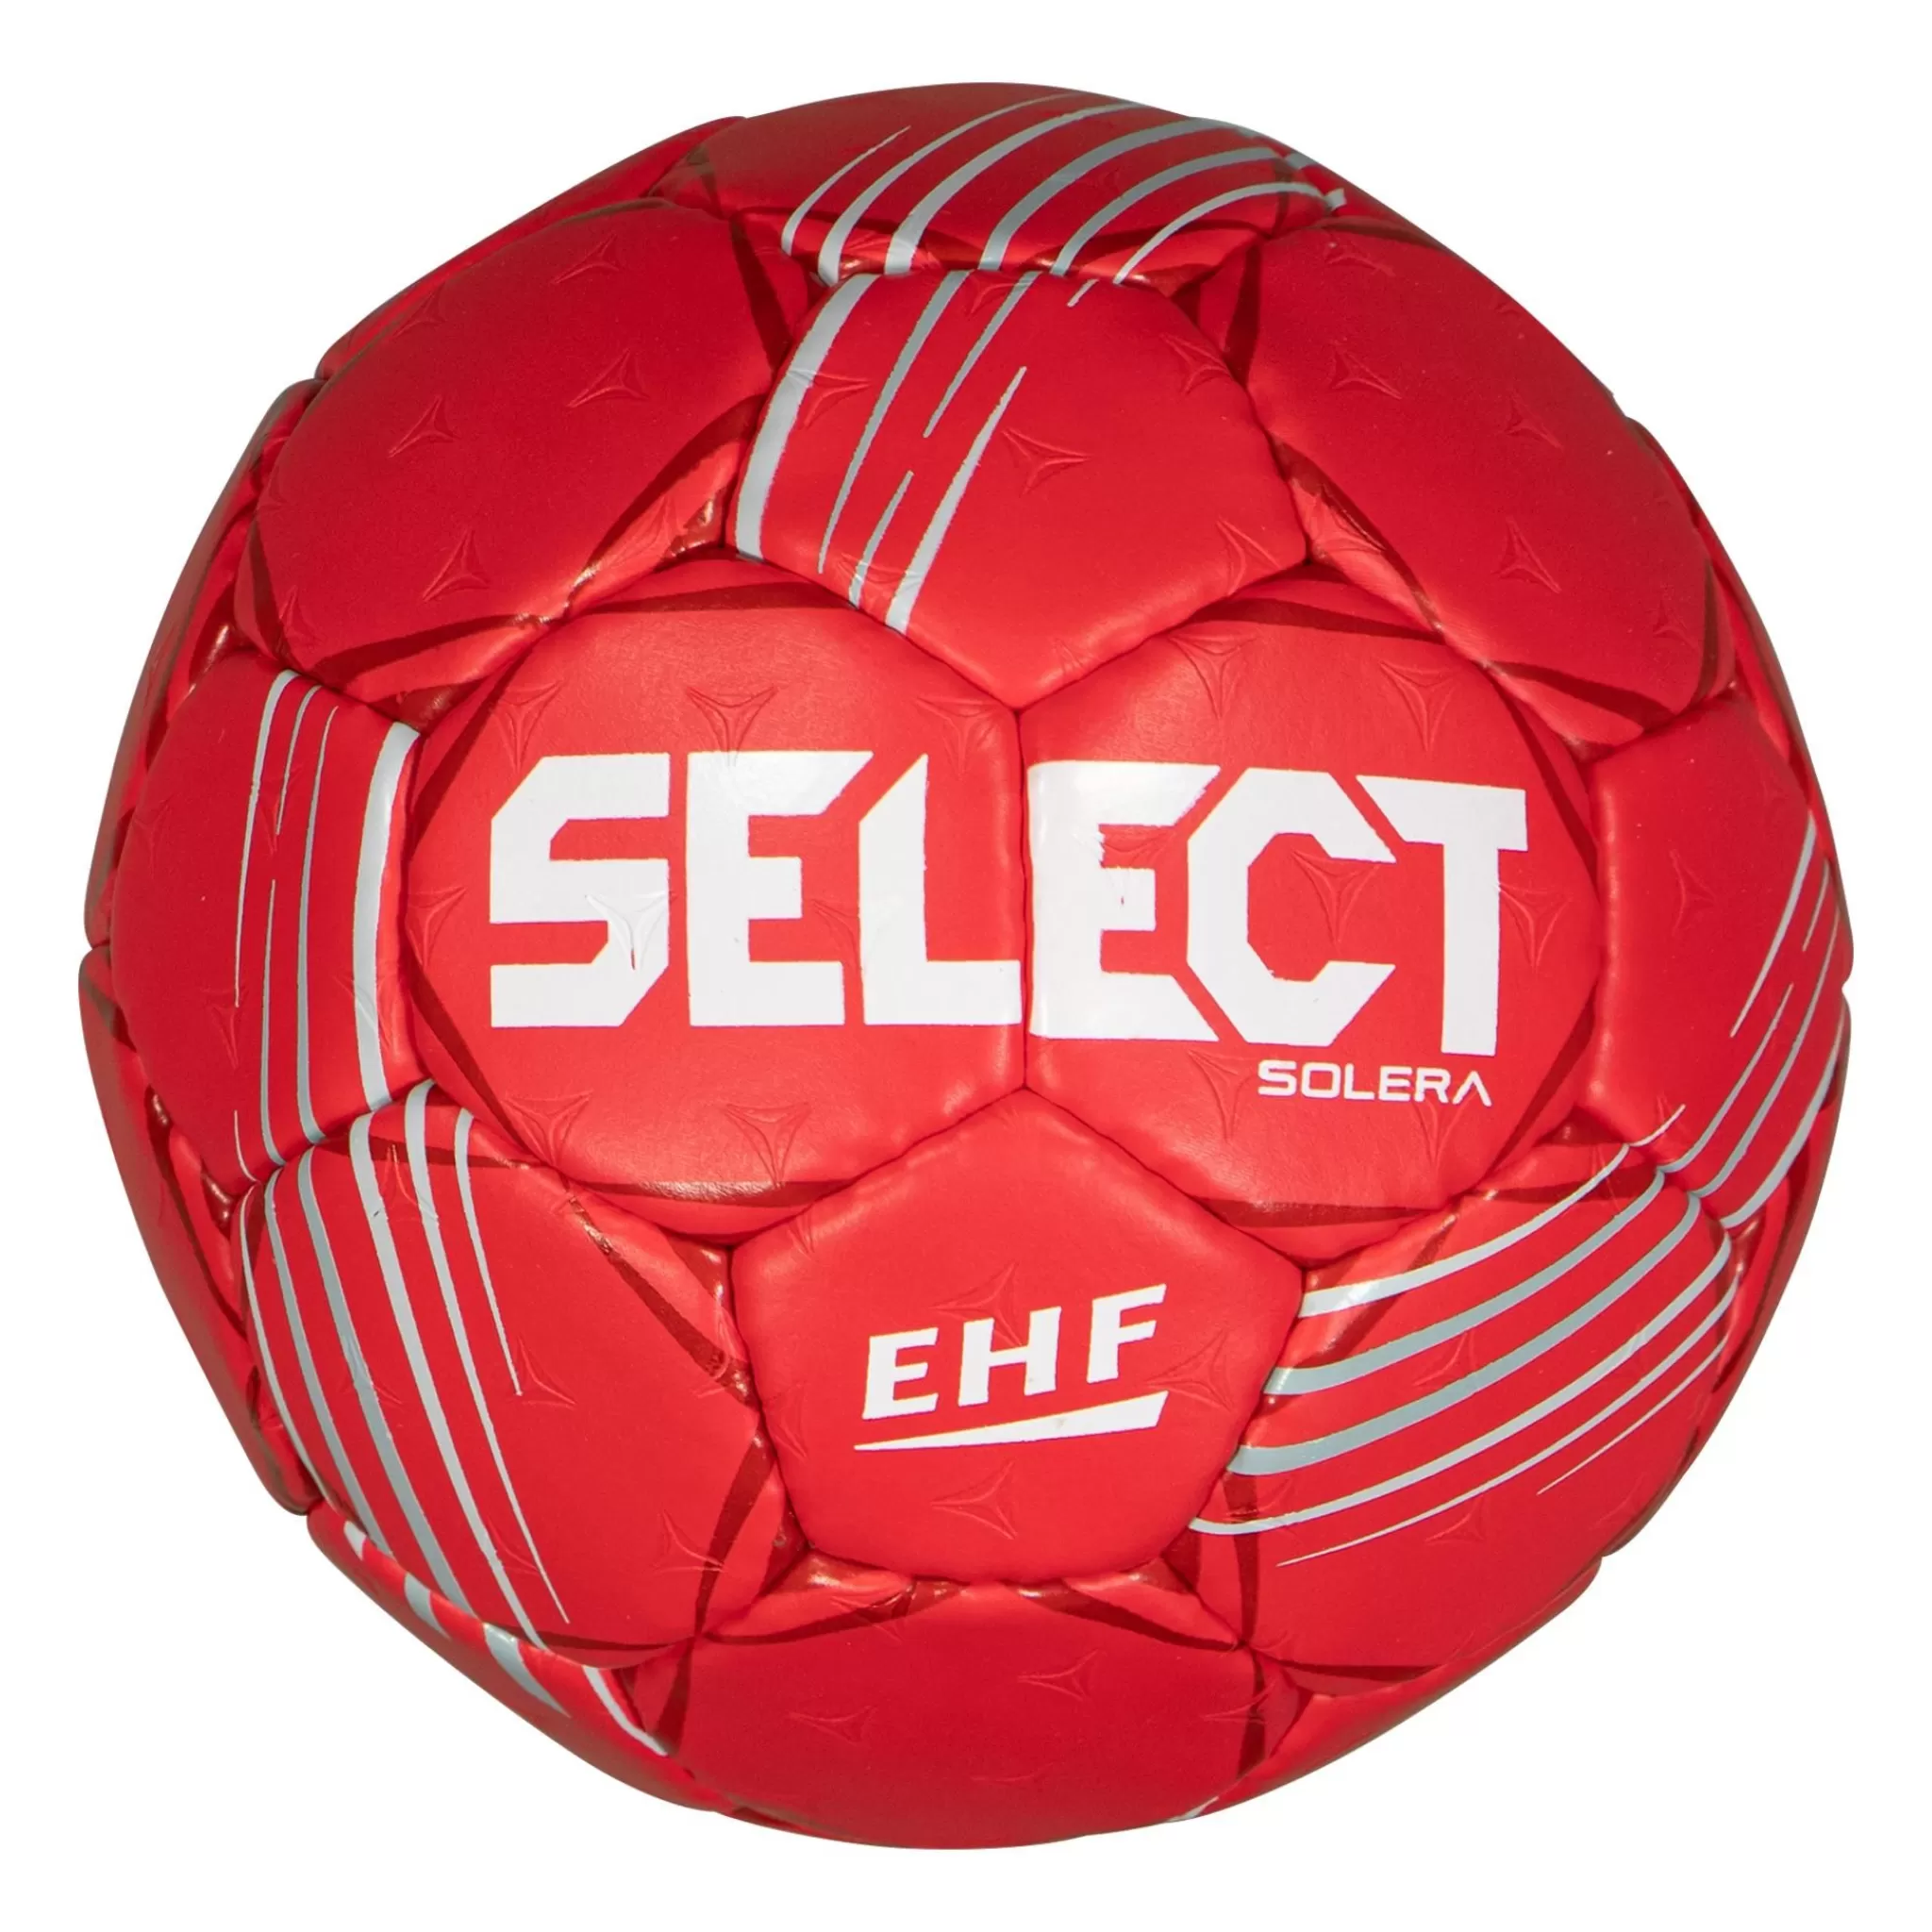 Clearance select Hb Solera V22, Handball